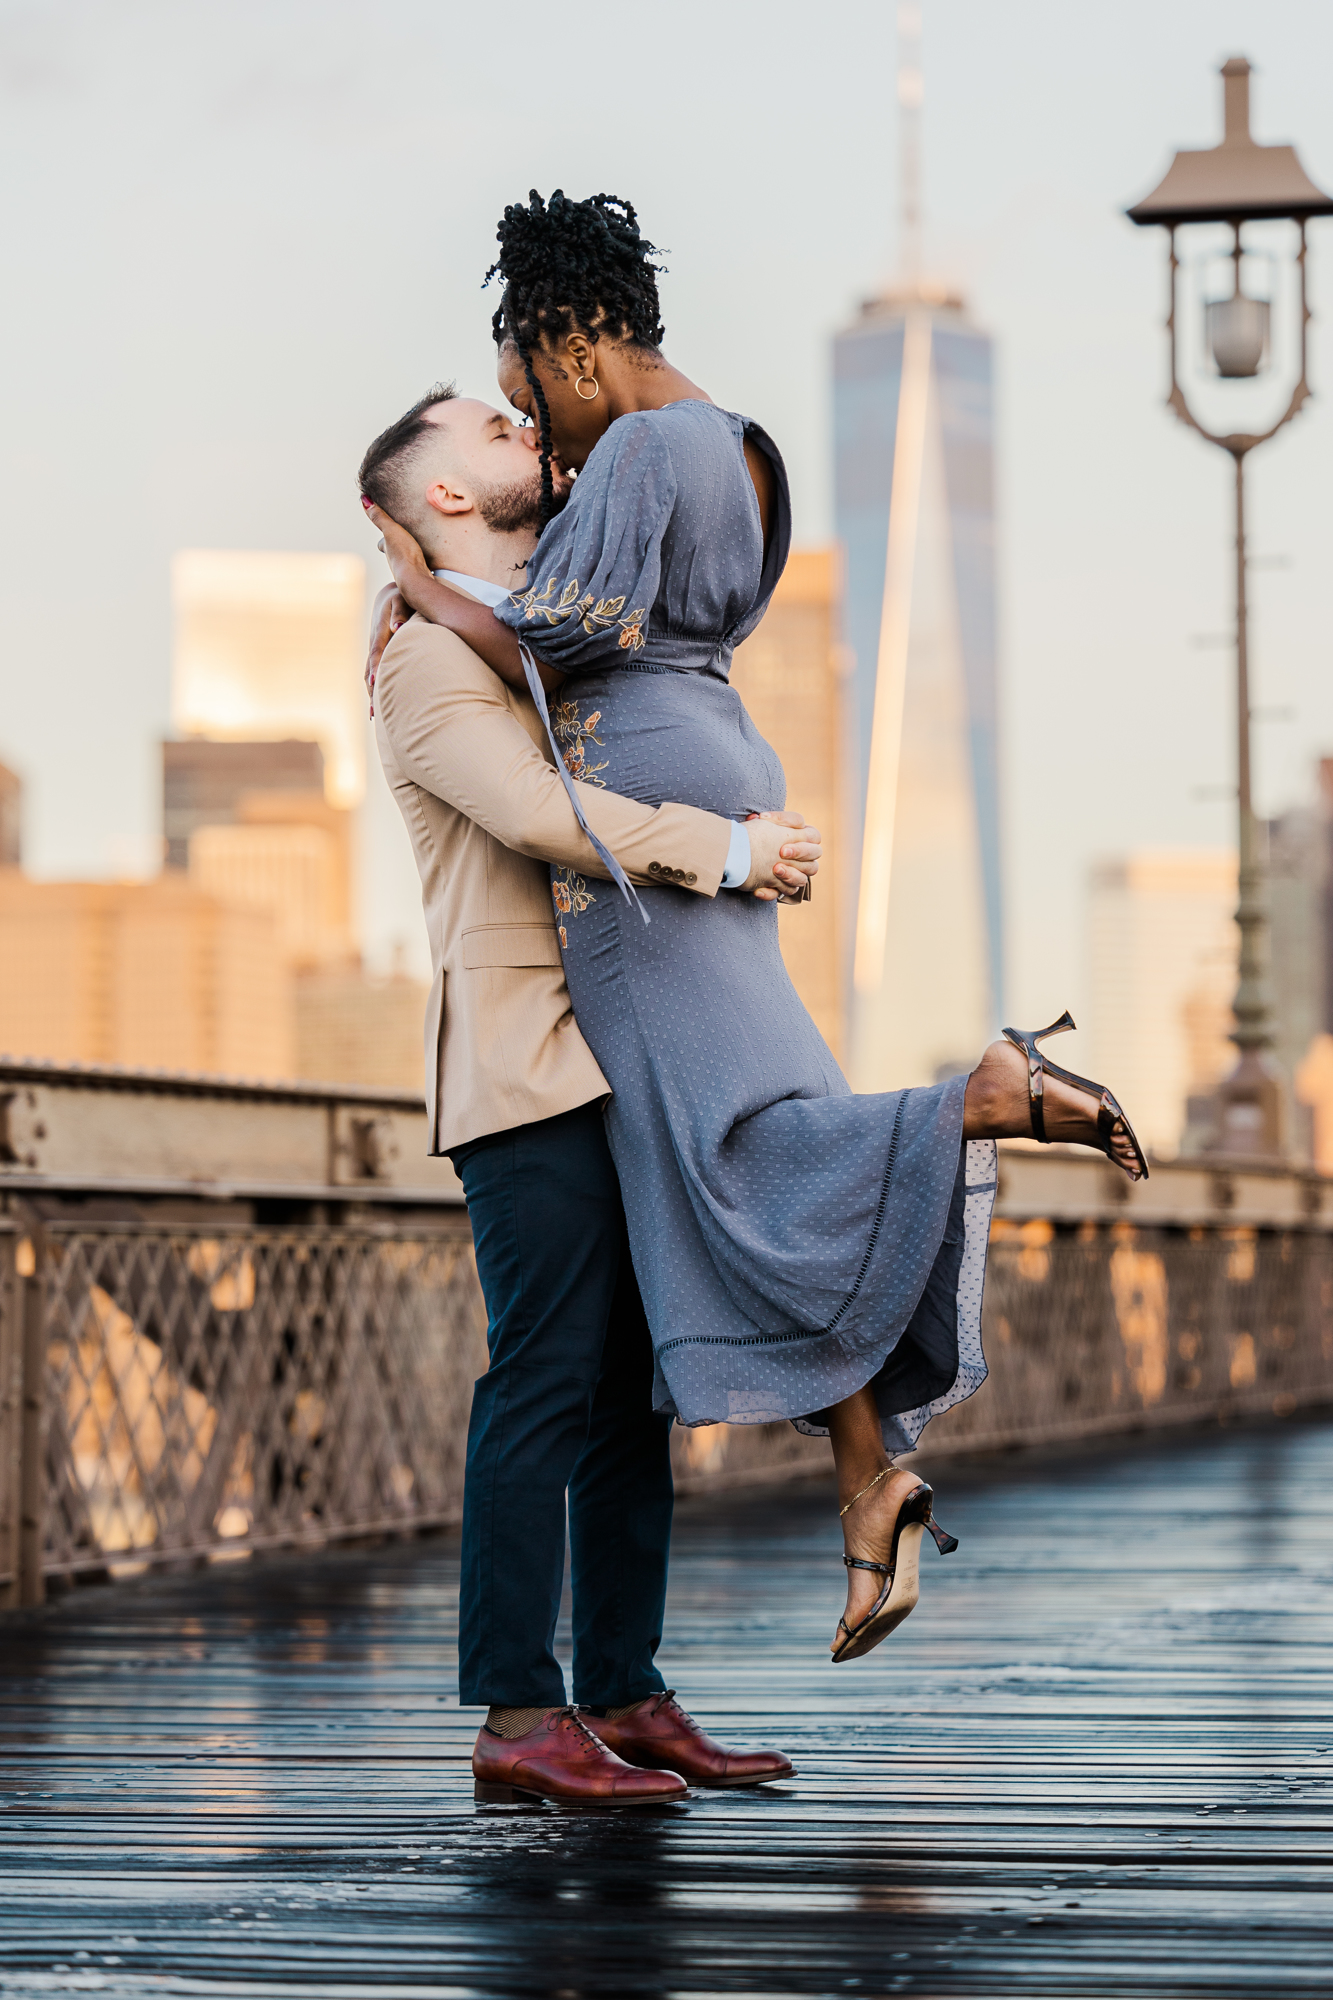 Playful Brooklyn Bridge Engagement Photos